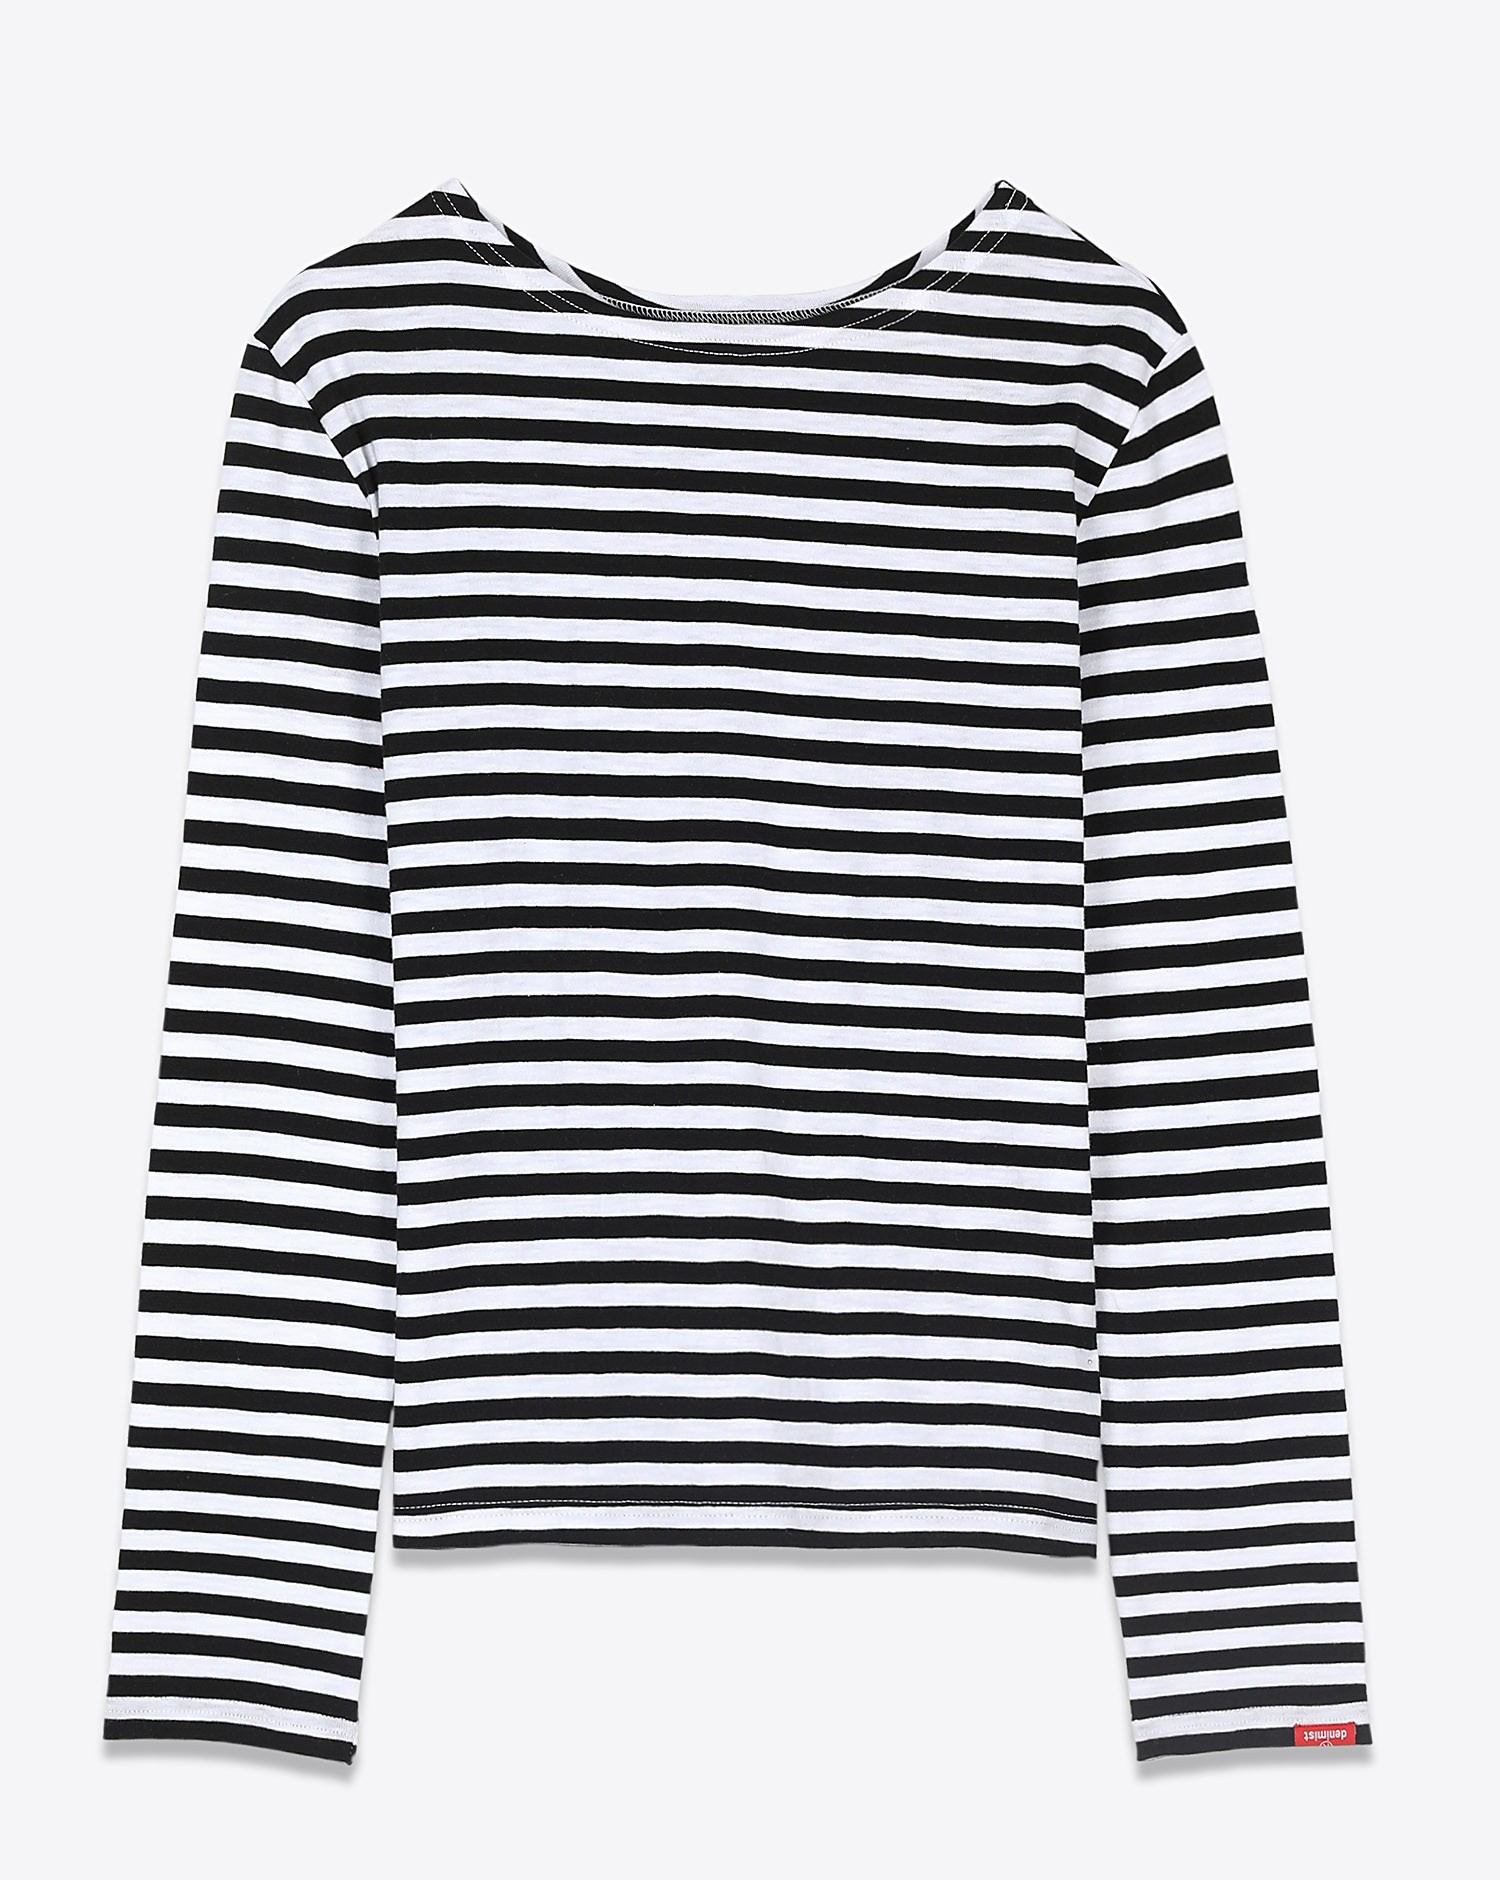 Image du produit Denimist Striped Tee - Black White Stripe   - porté